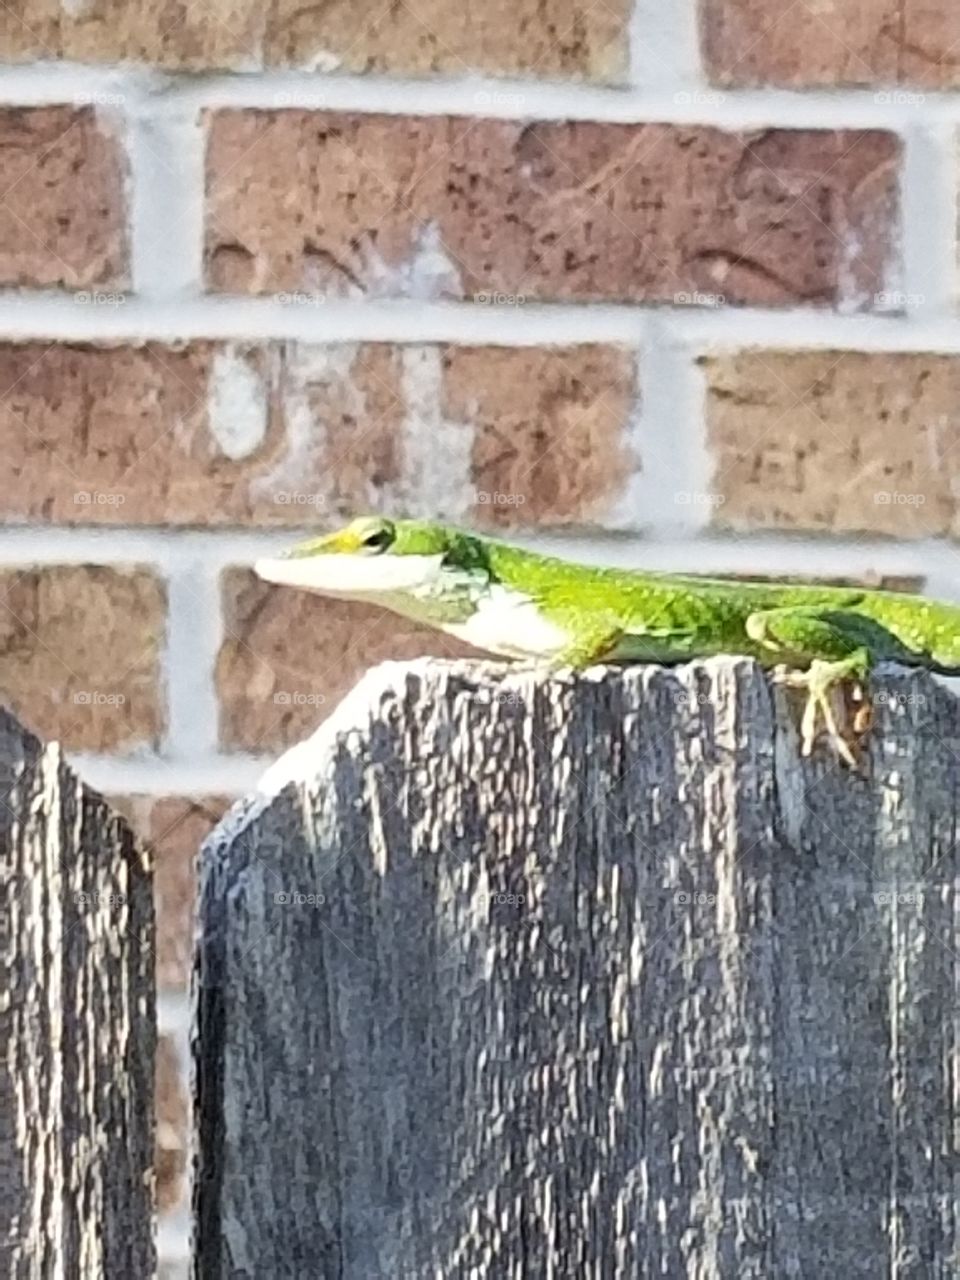 Lizard on the fence